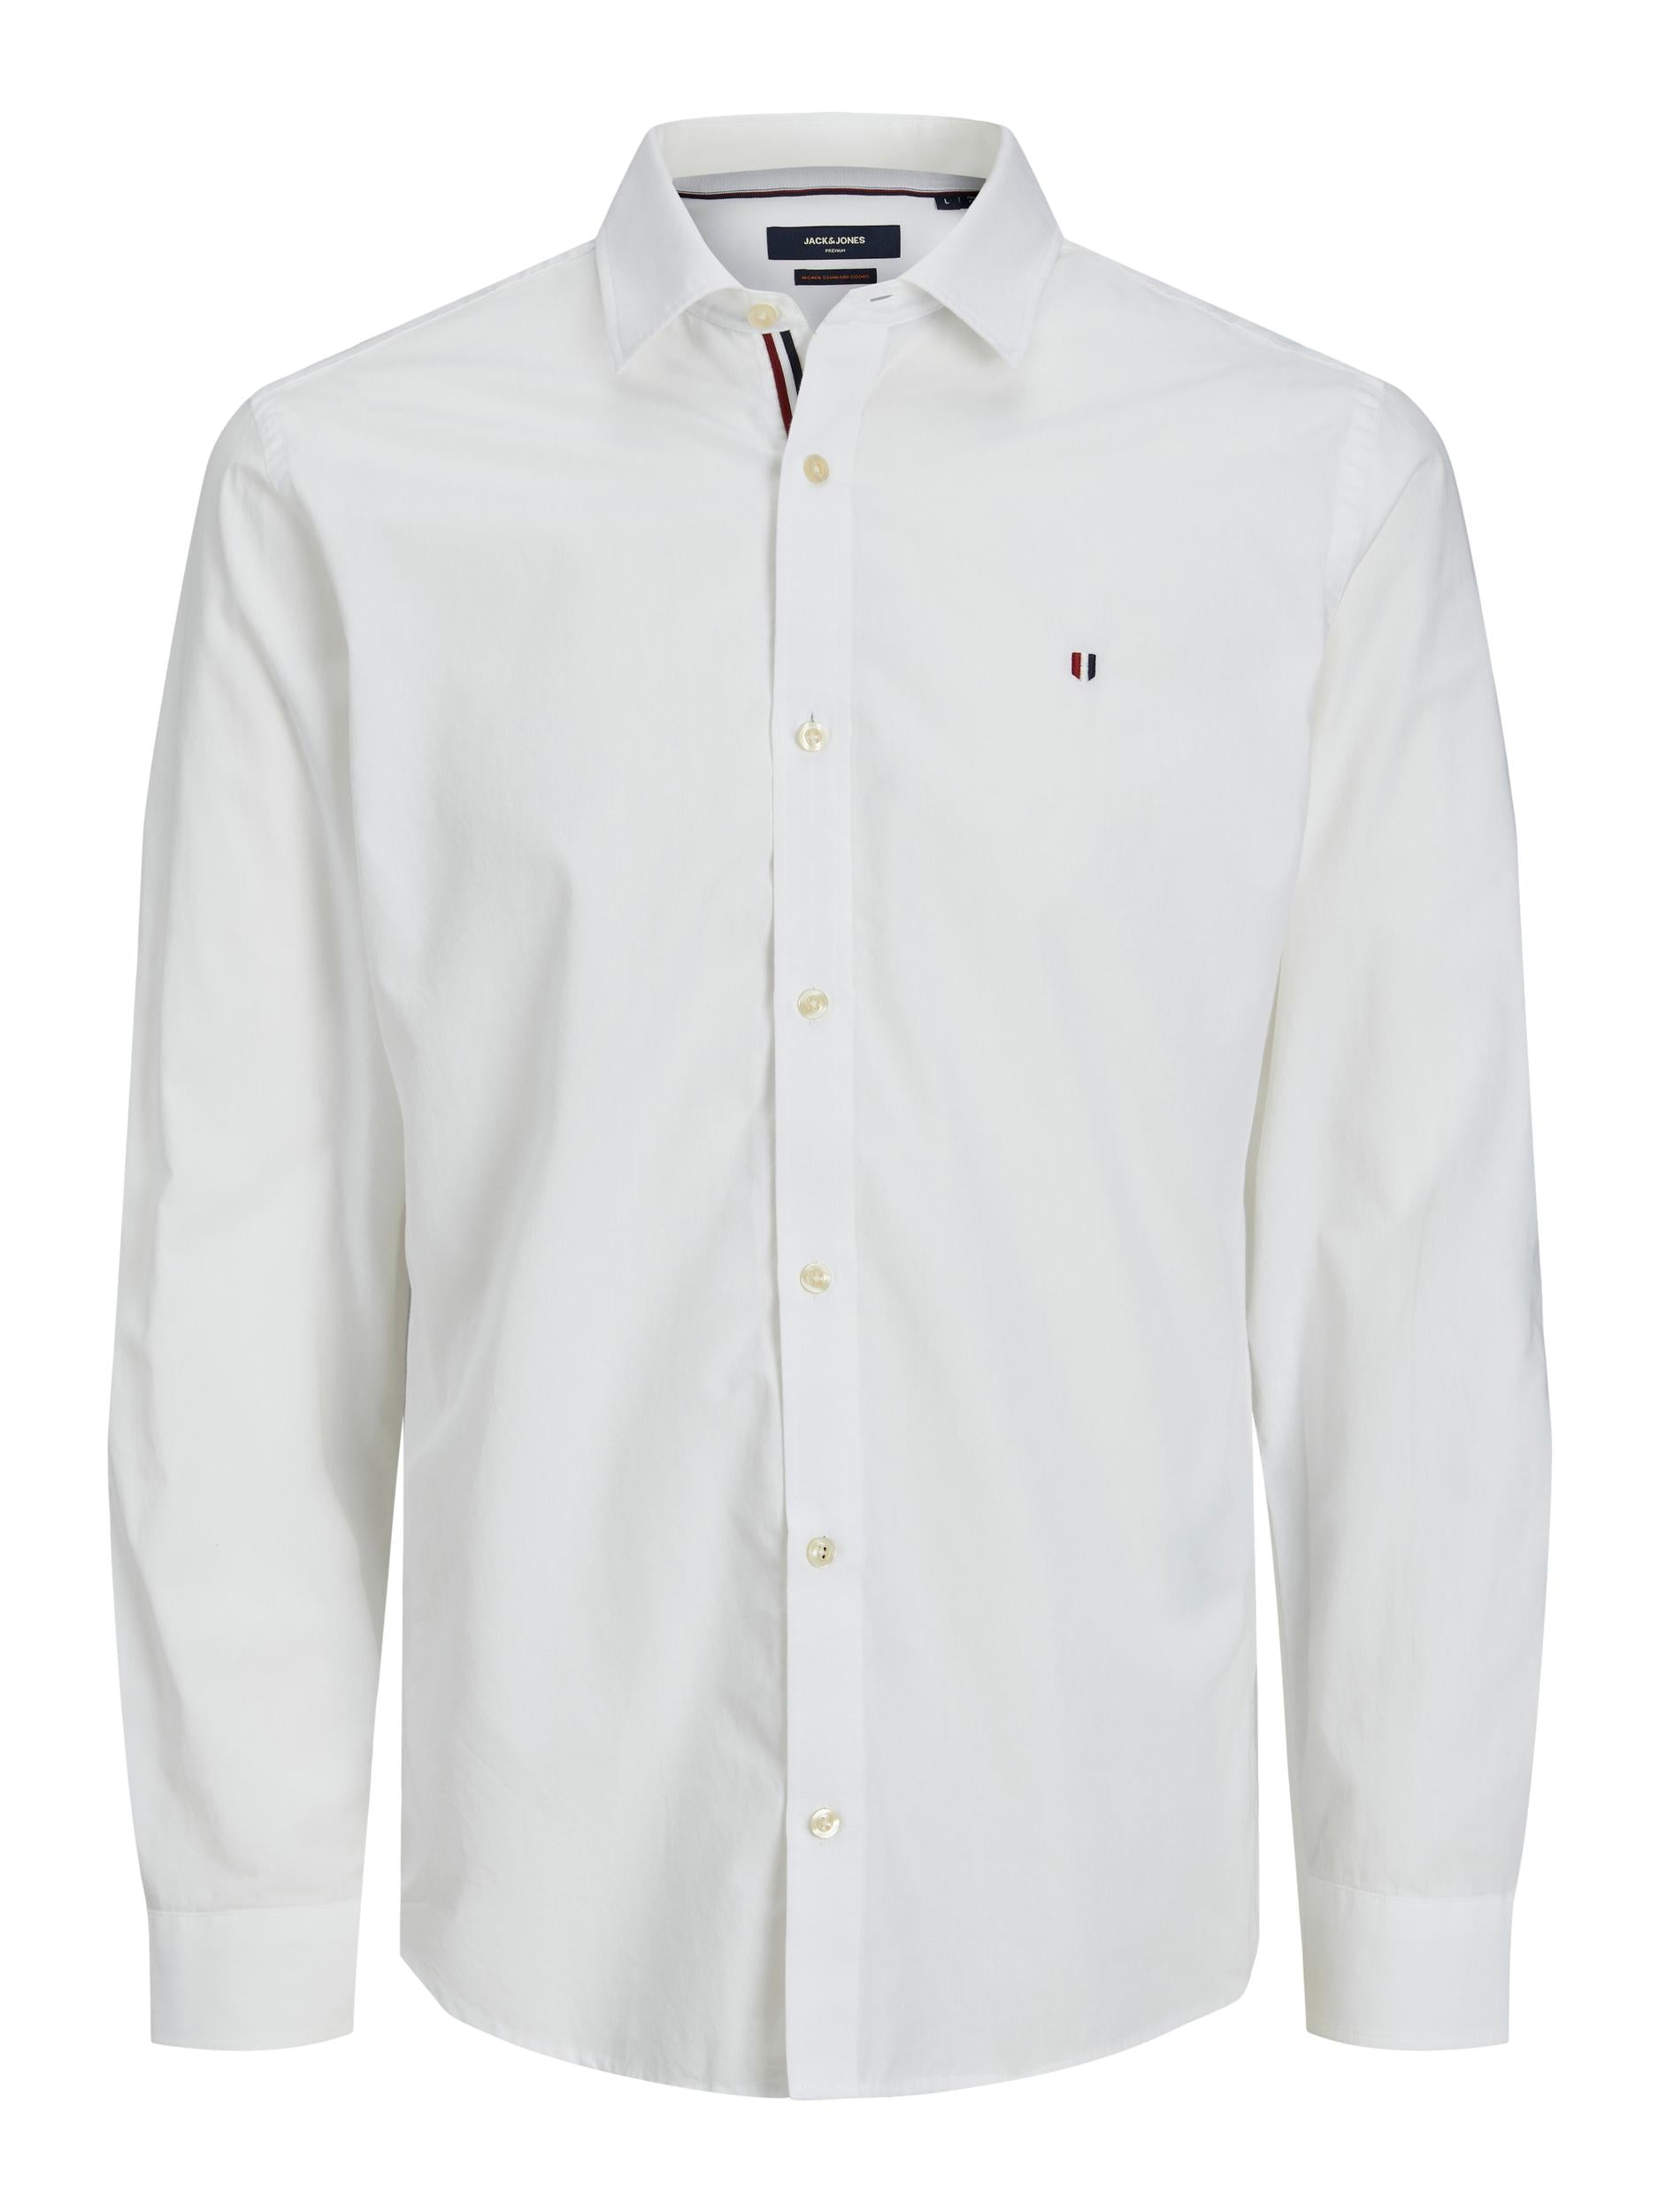 Men's Derek Classic Long Sleeve Shirt-Bright White-Front View